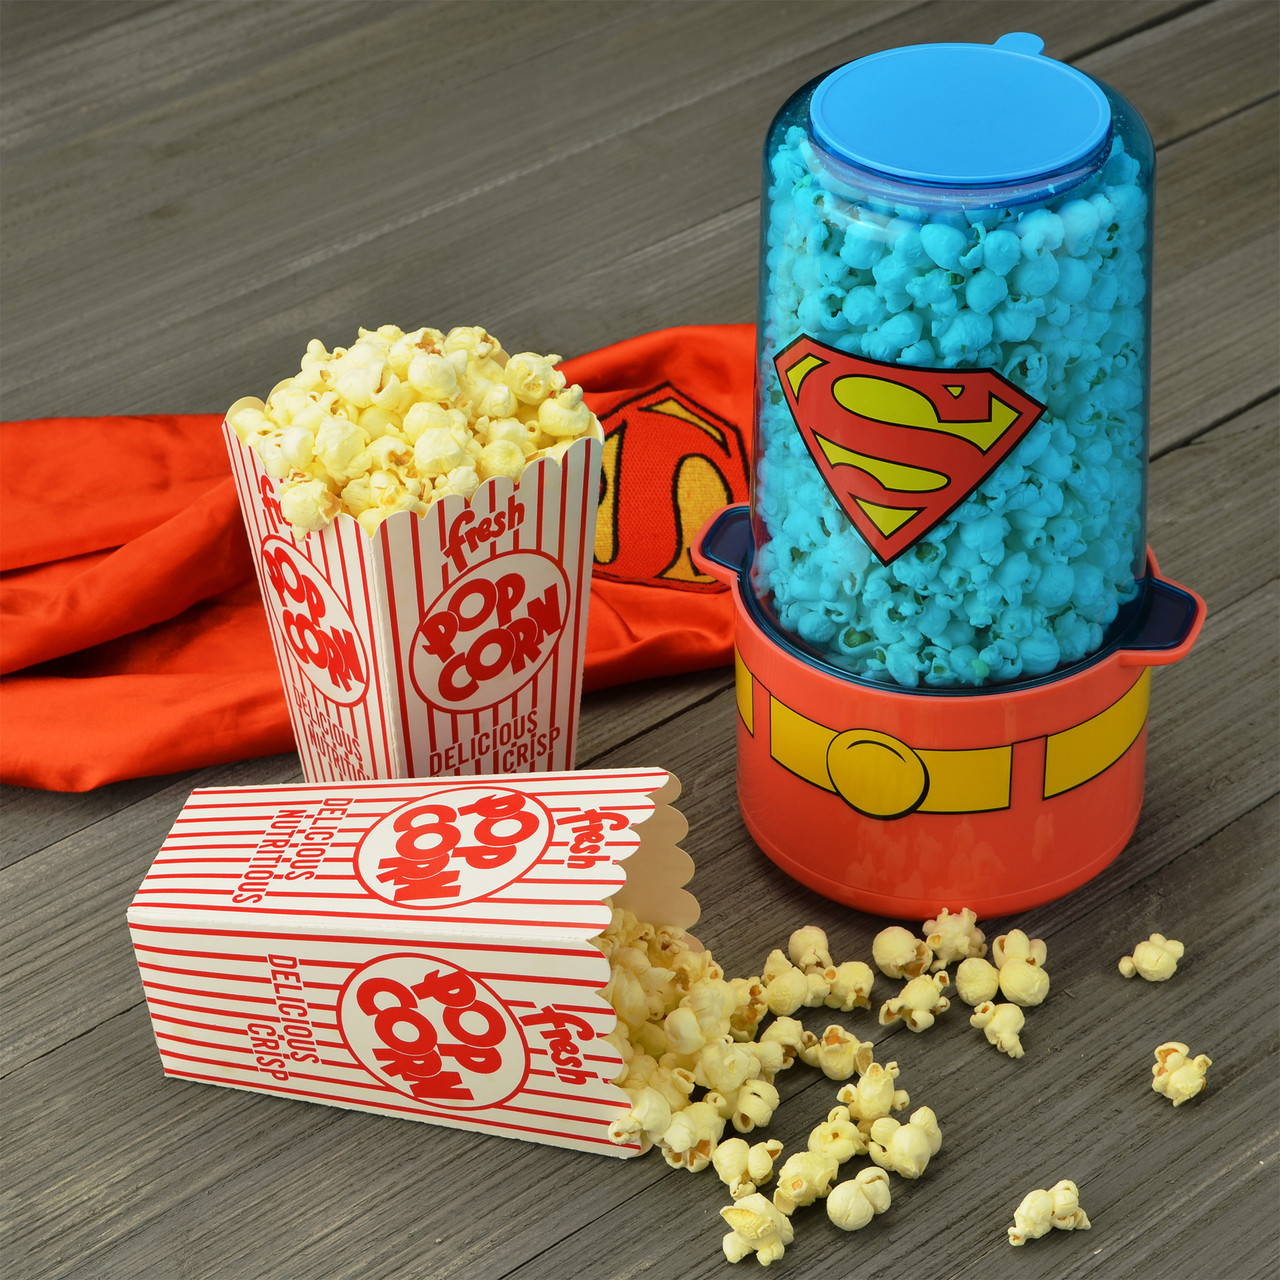 Pixar Stir Popcorn Popper